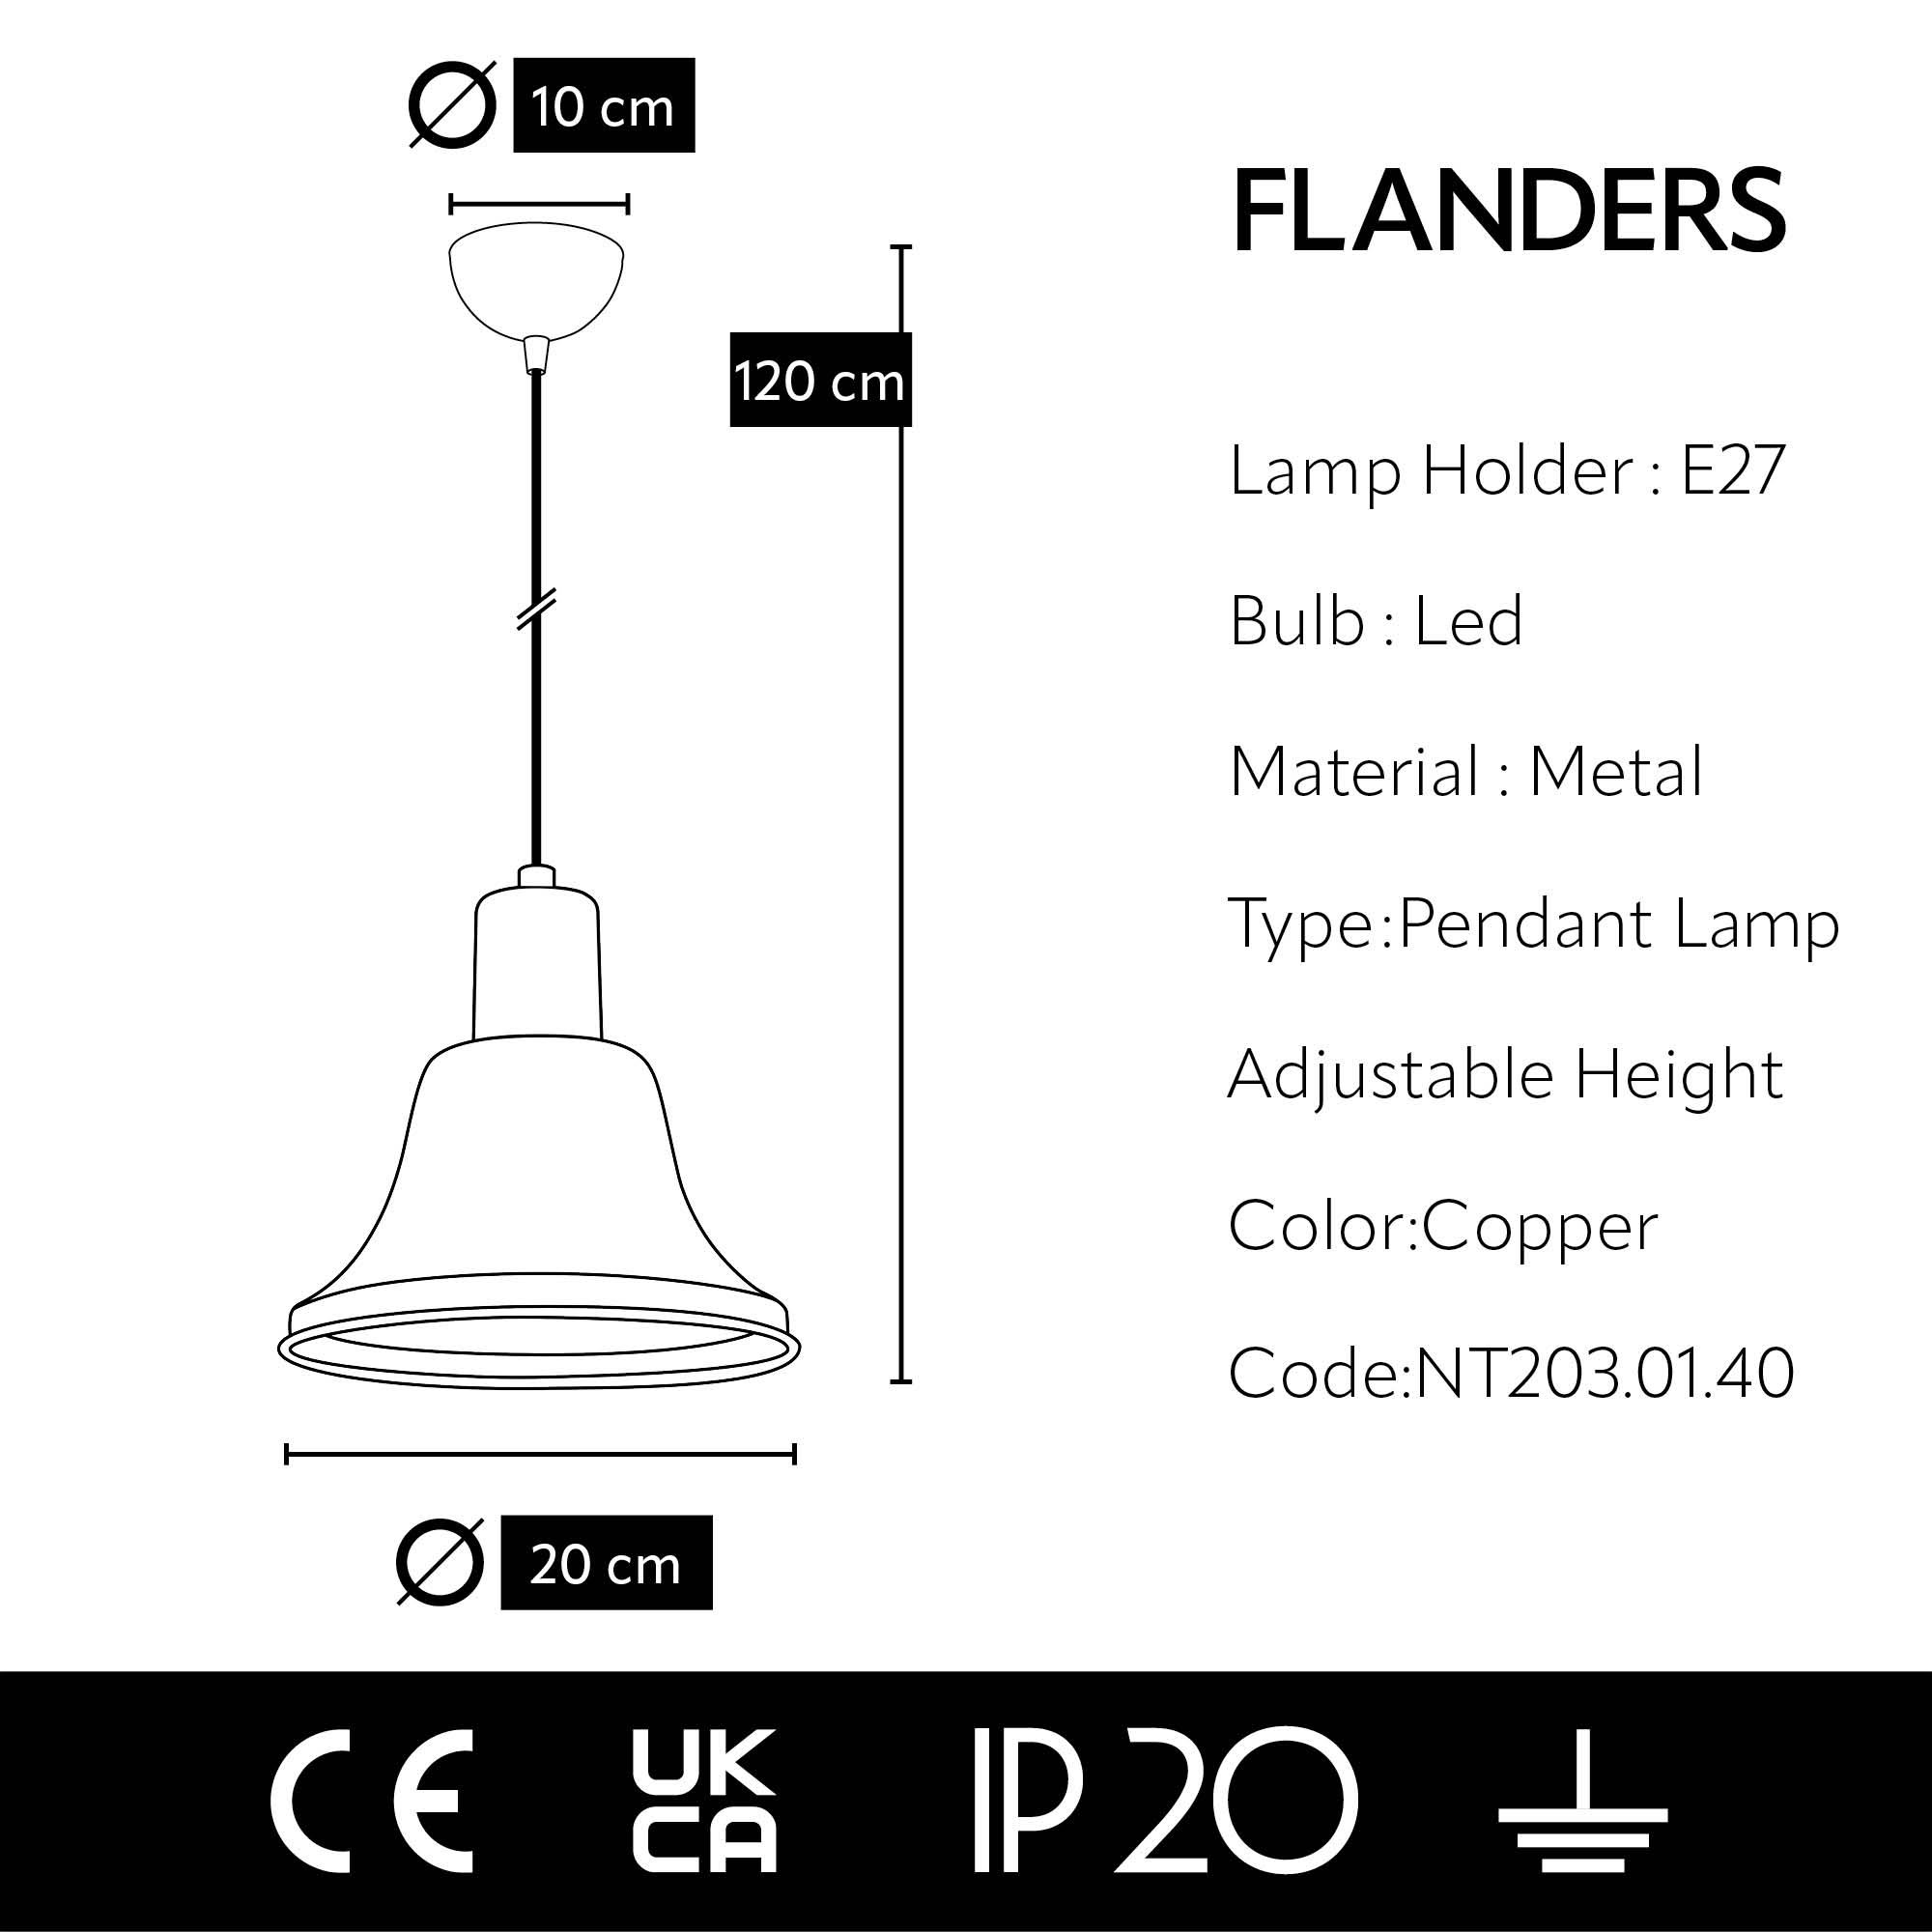 FLANDERS Pendant lamp